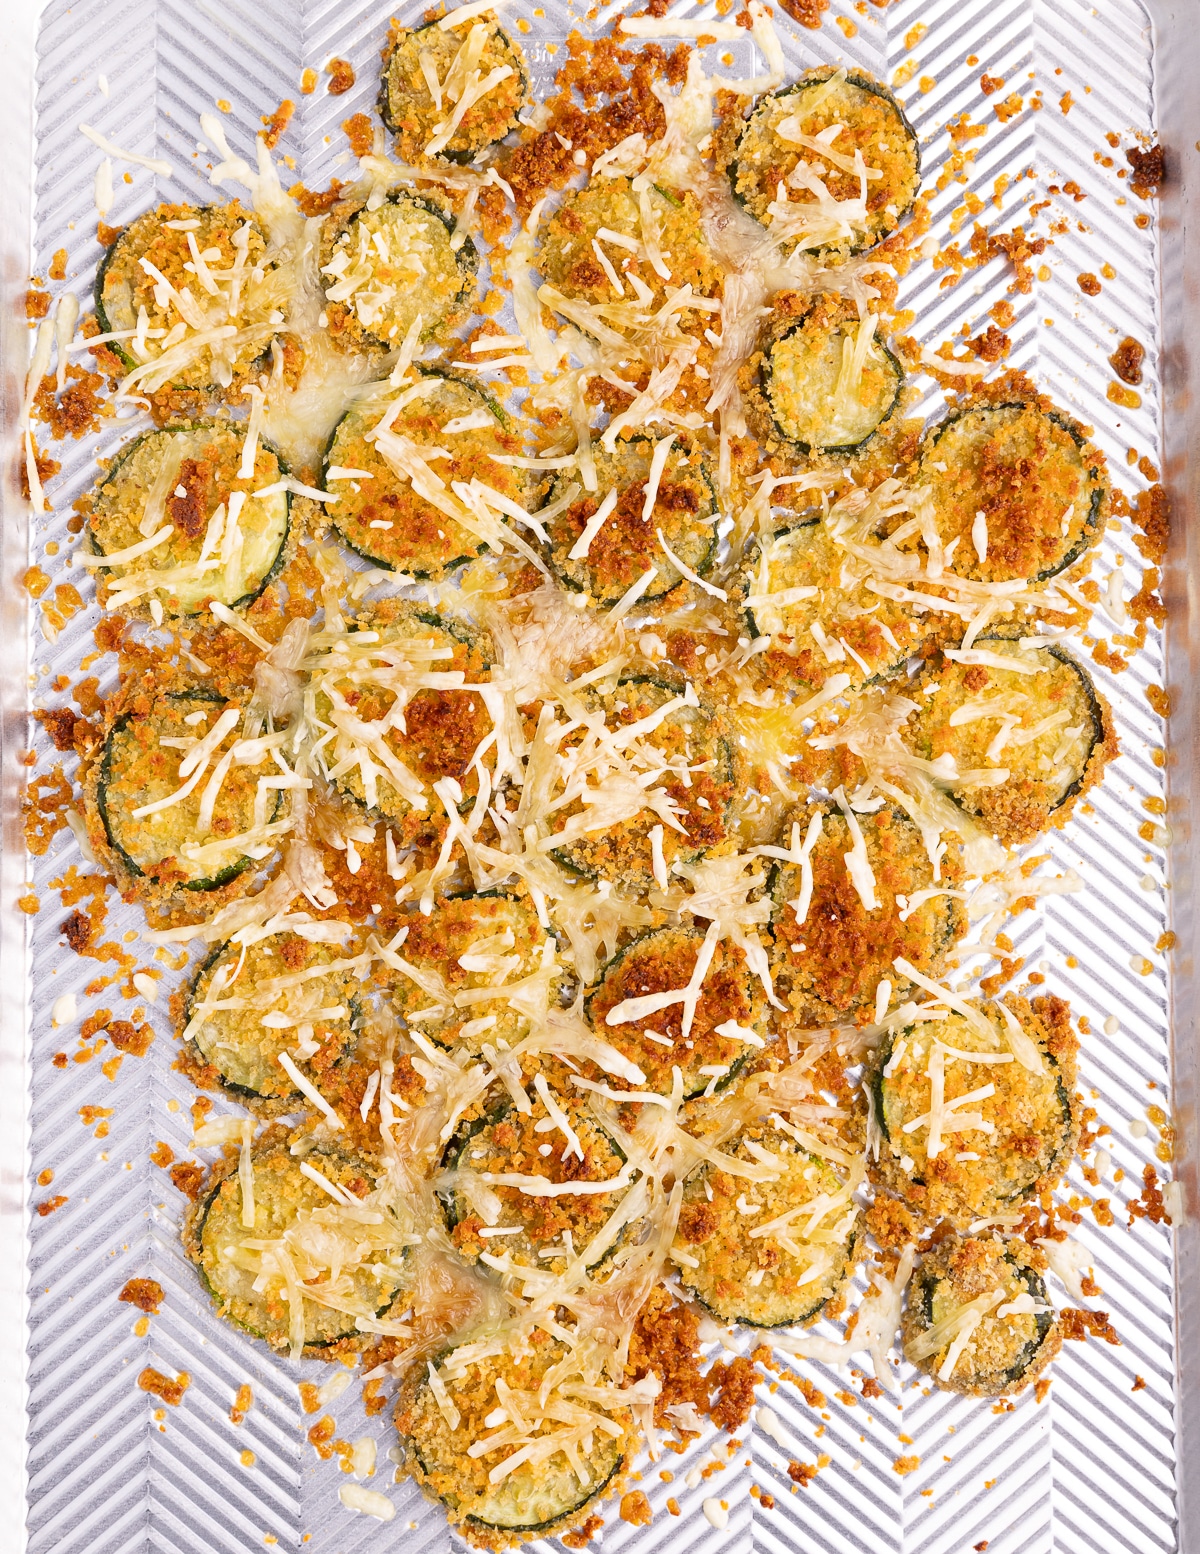 crispy, cheesy zucchini slices on a baking tray